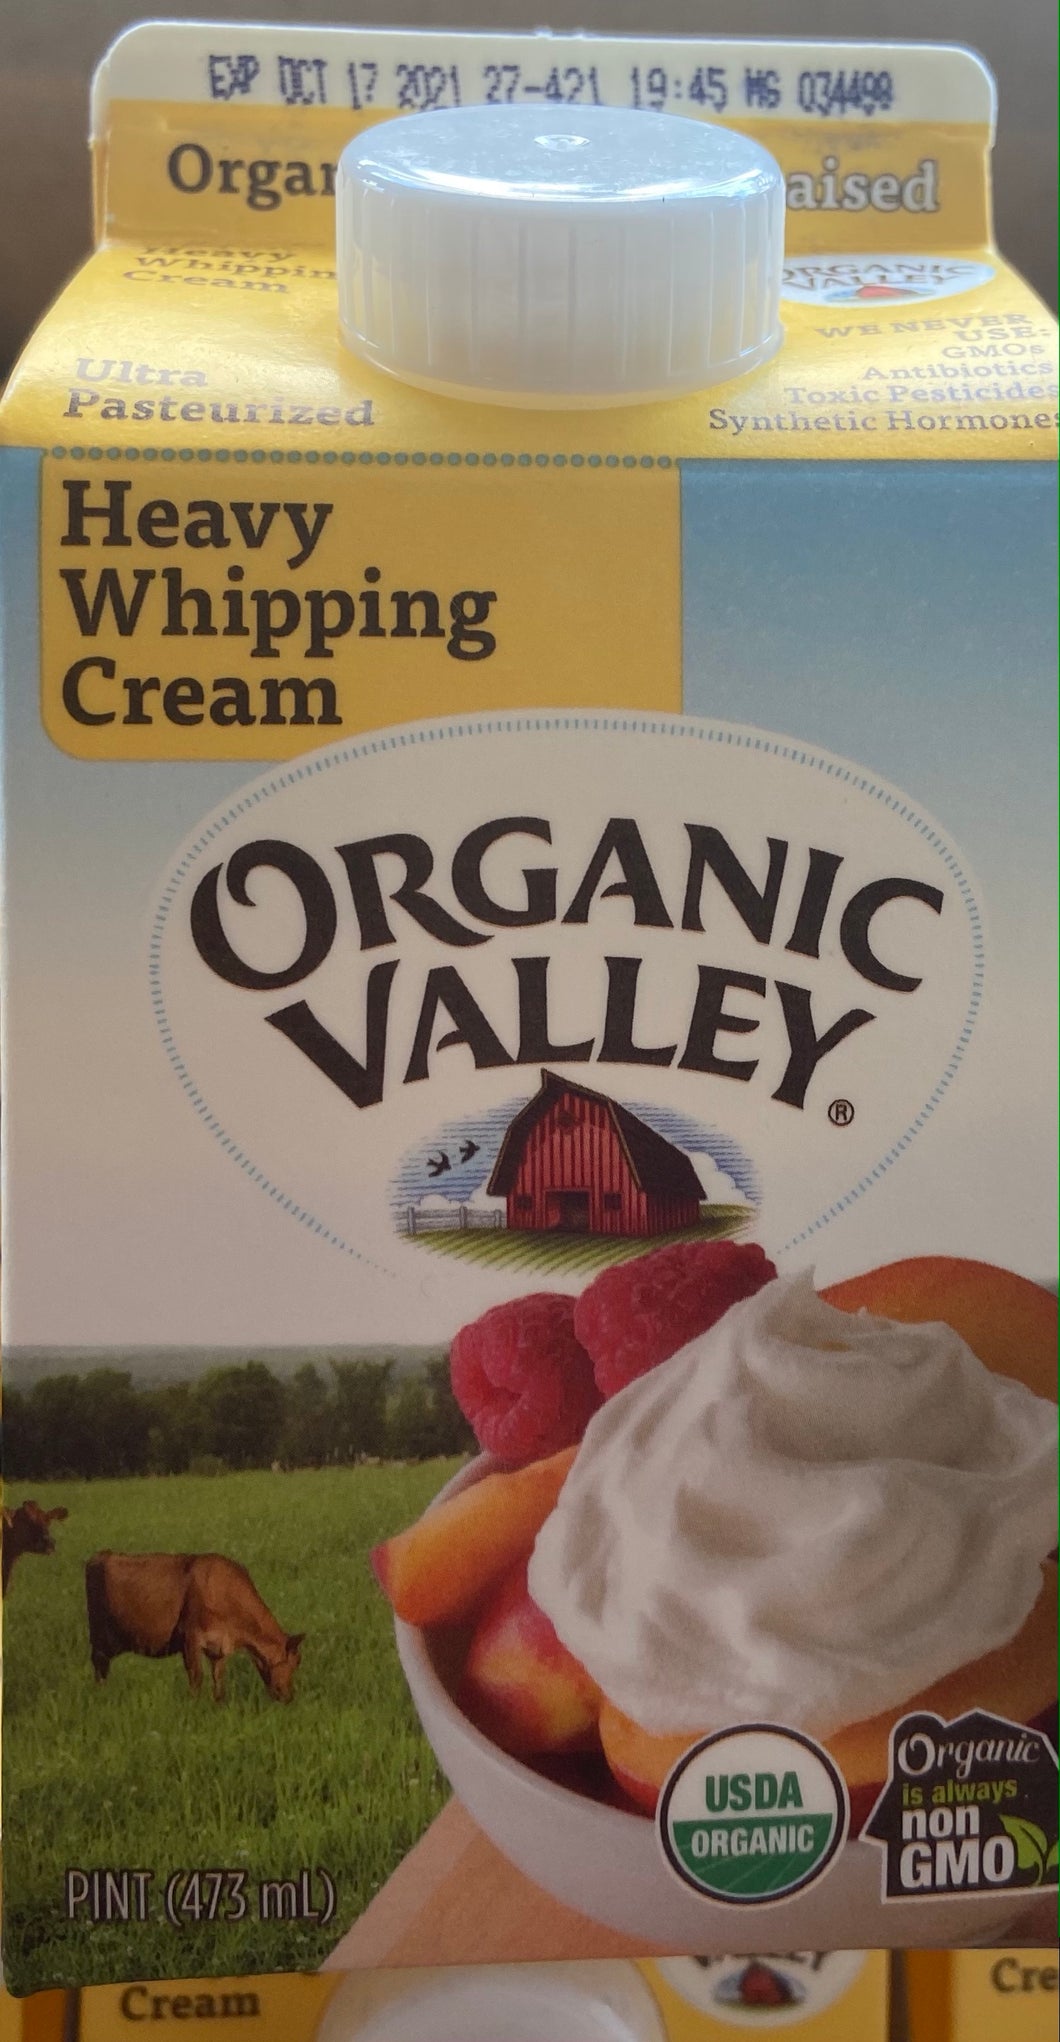 Whipping Cream, Heavy, Organic Valley, 16 oz